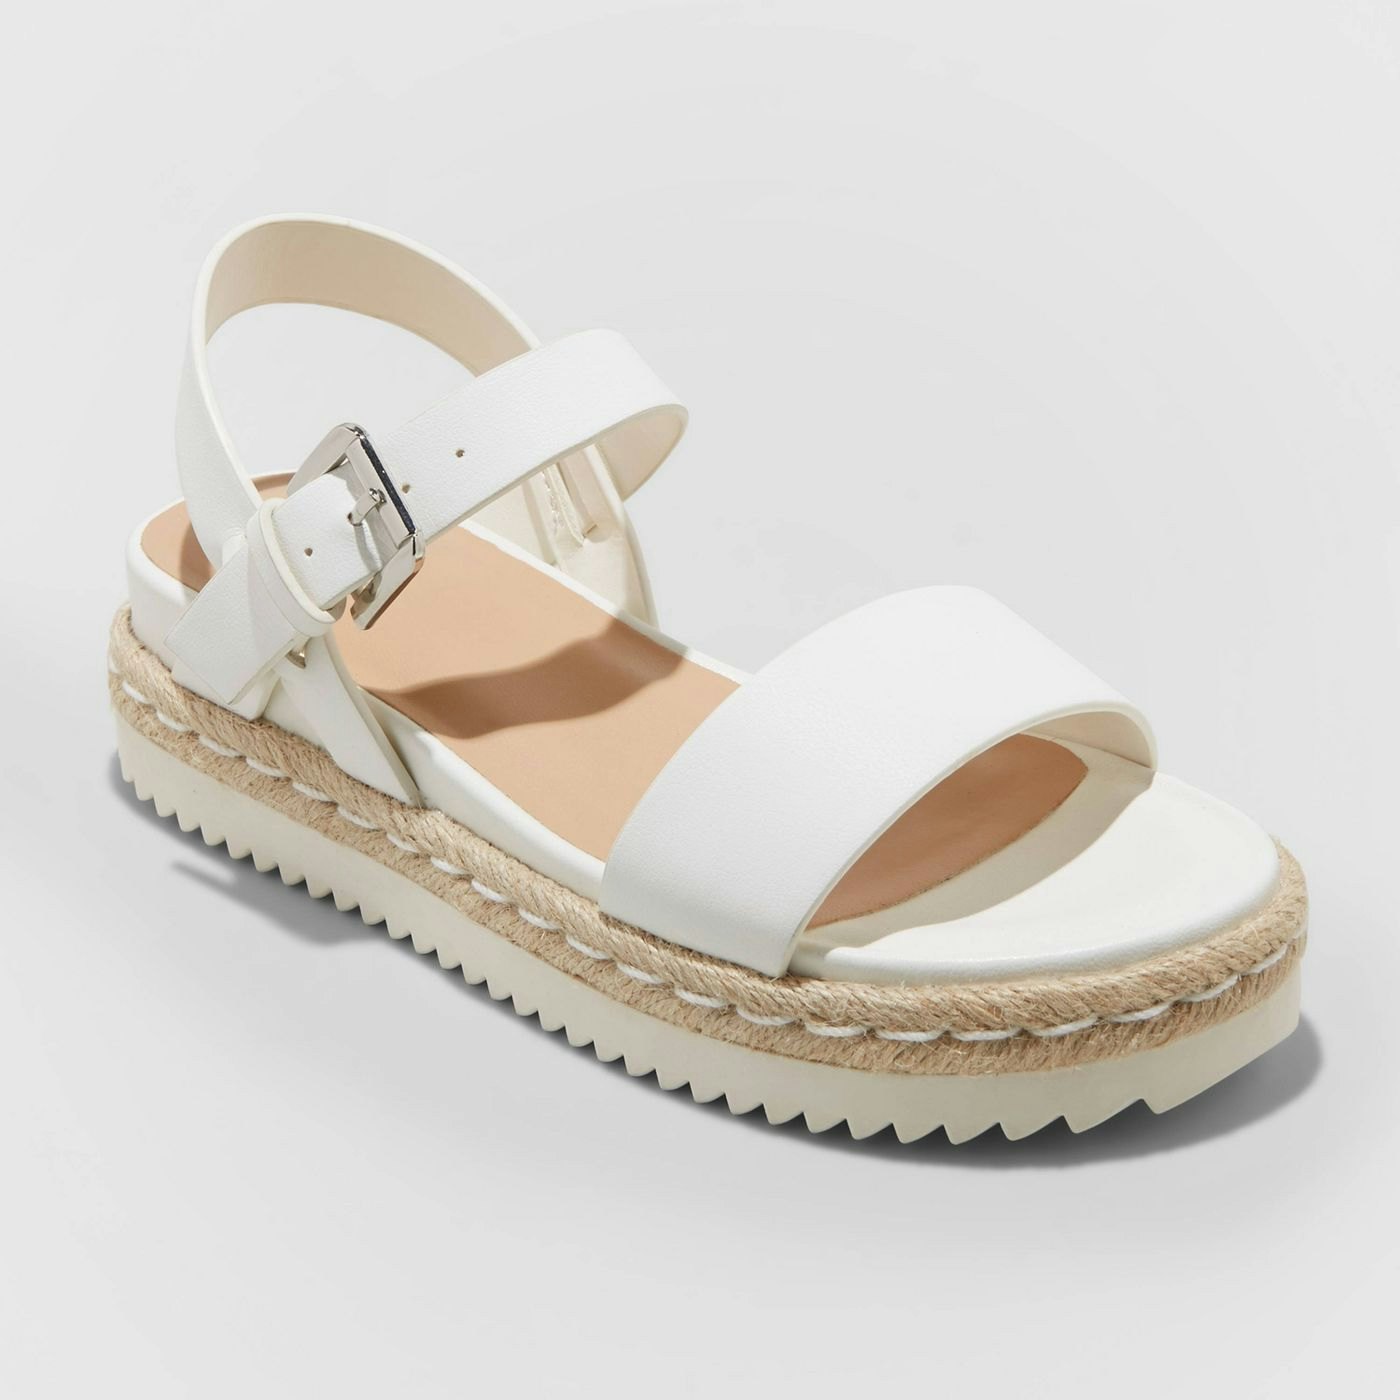 The Best Under-$35 Sandals At Target 